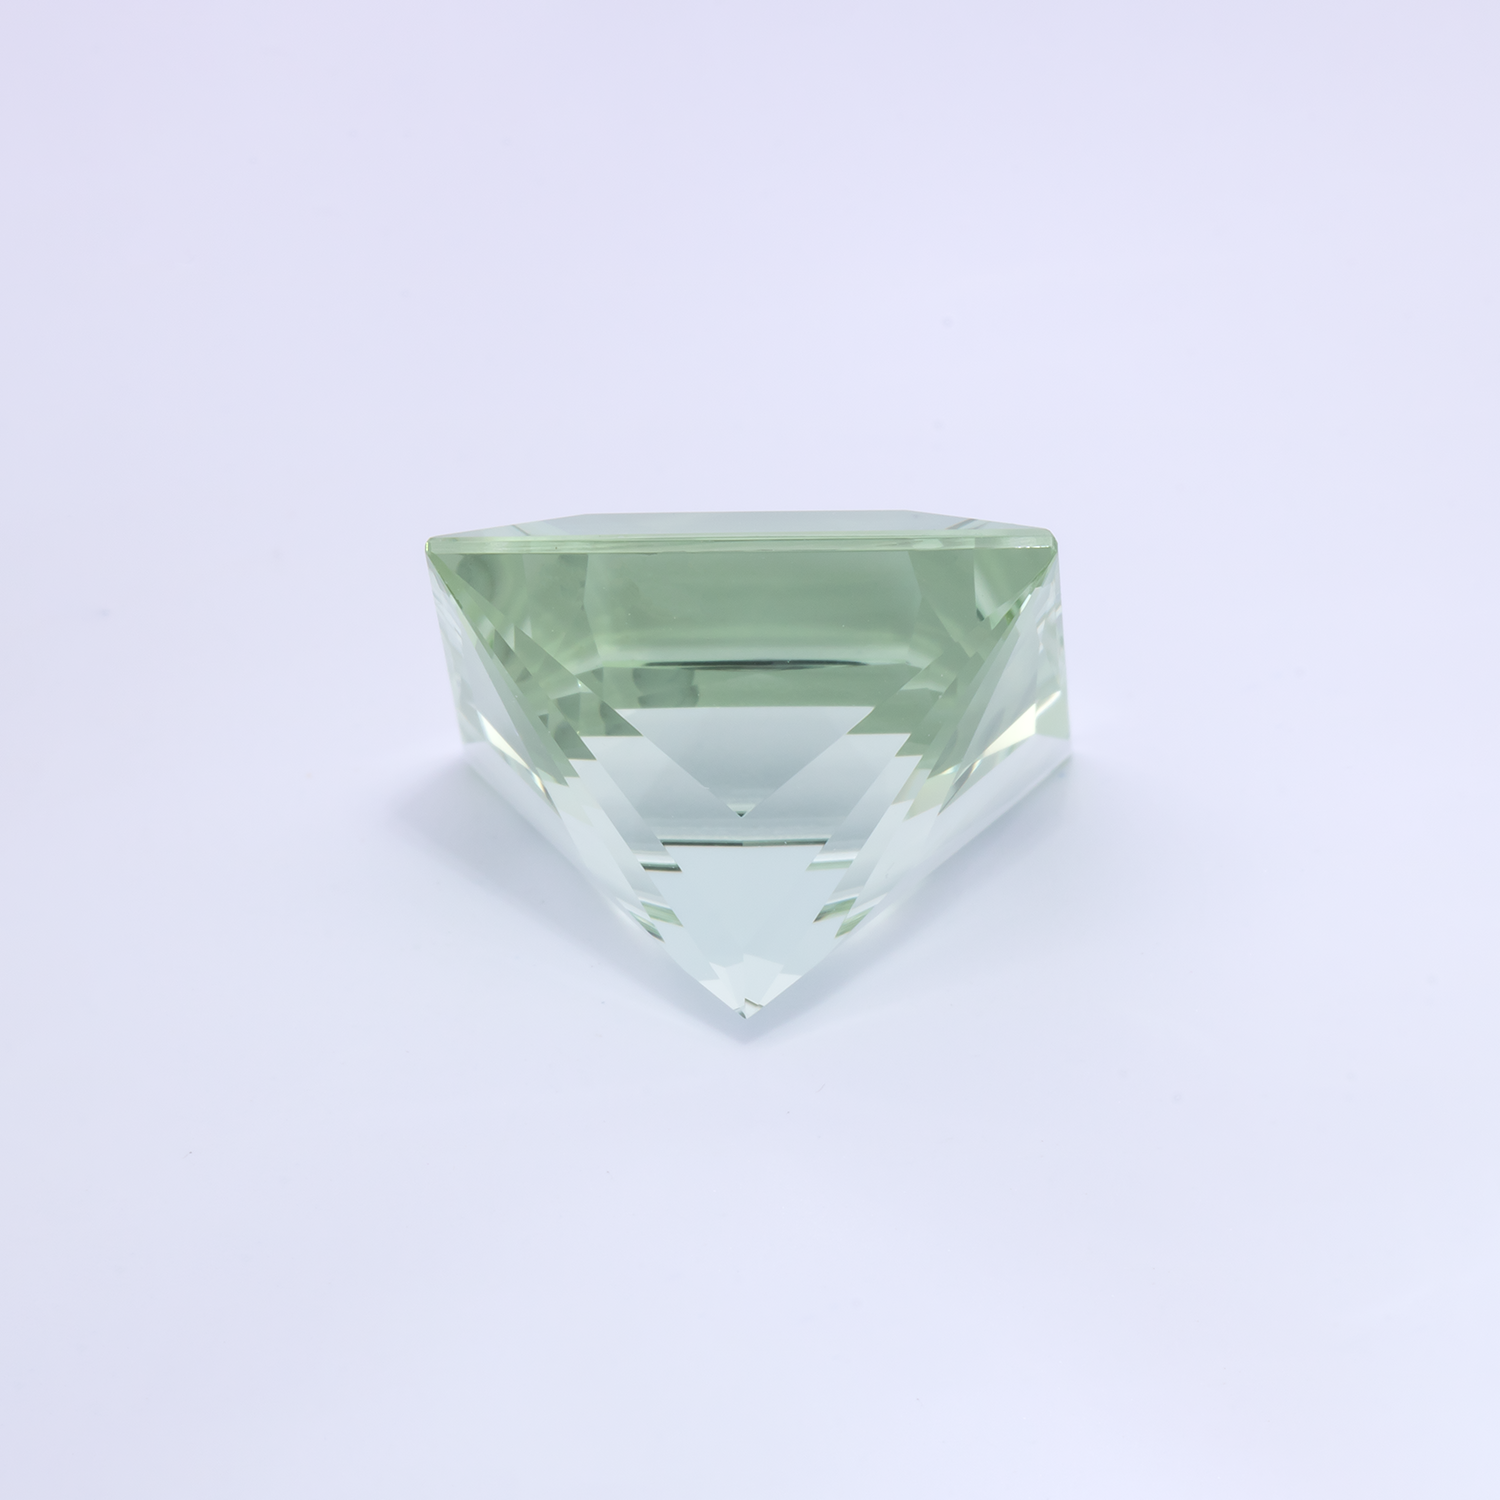 Beryll - grün, rechteck, 16x16 mm, 17.81 cts, Nr. BY90048